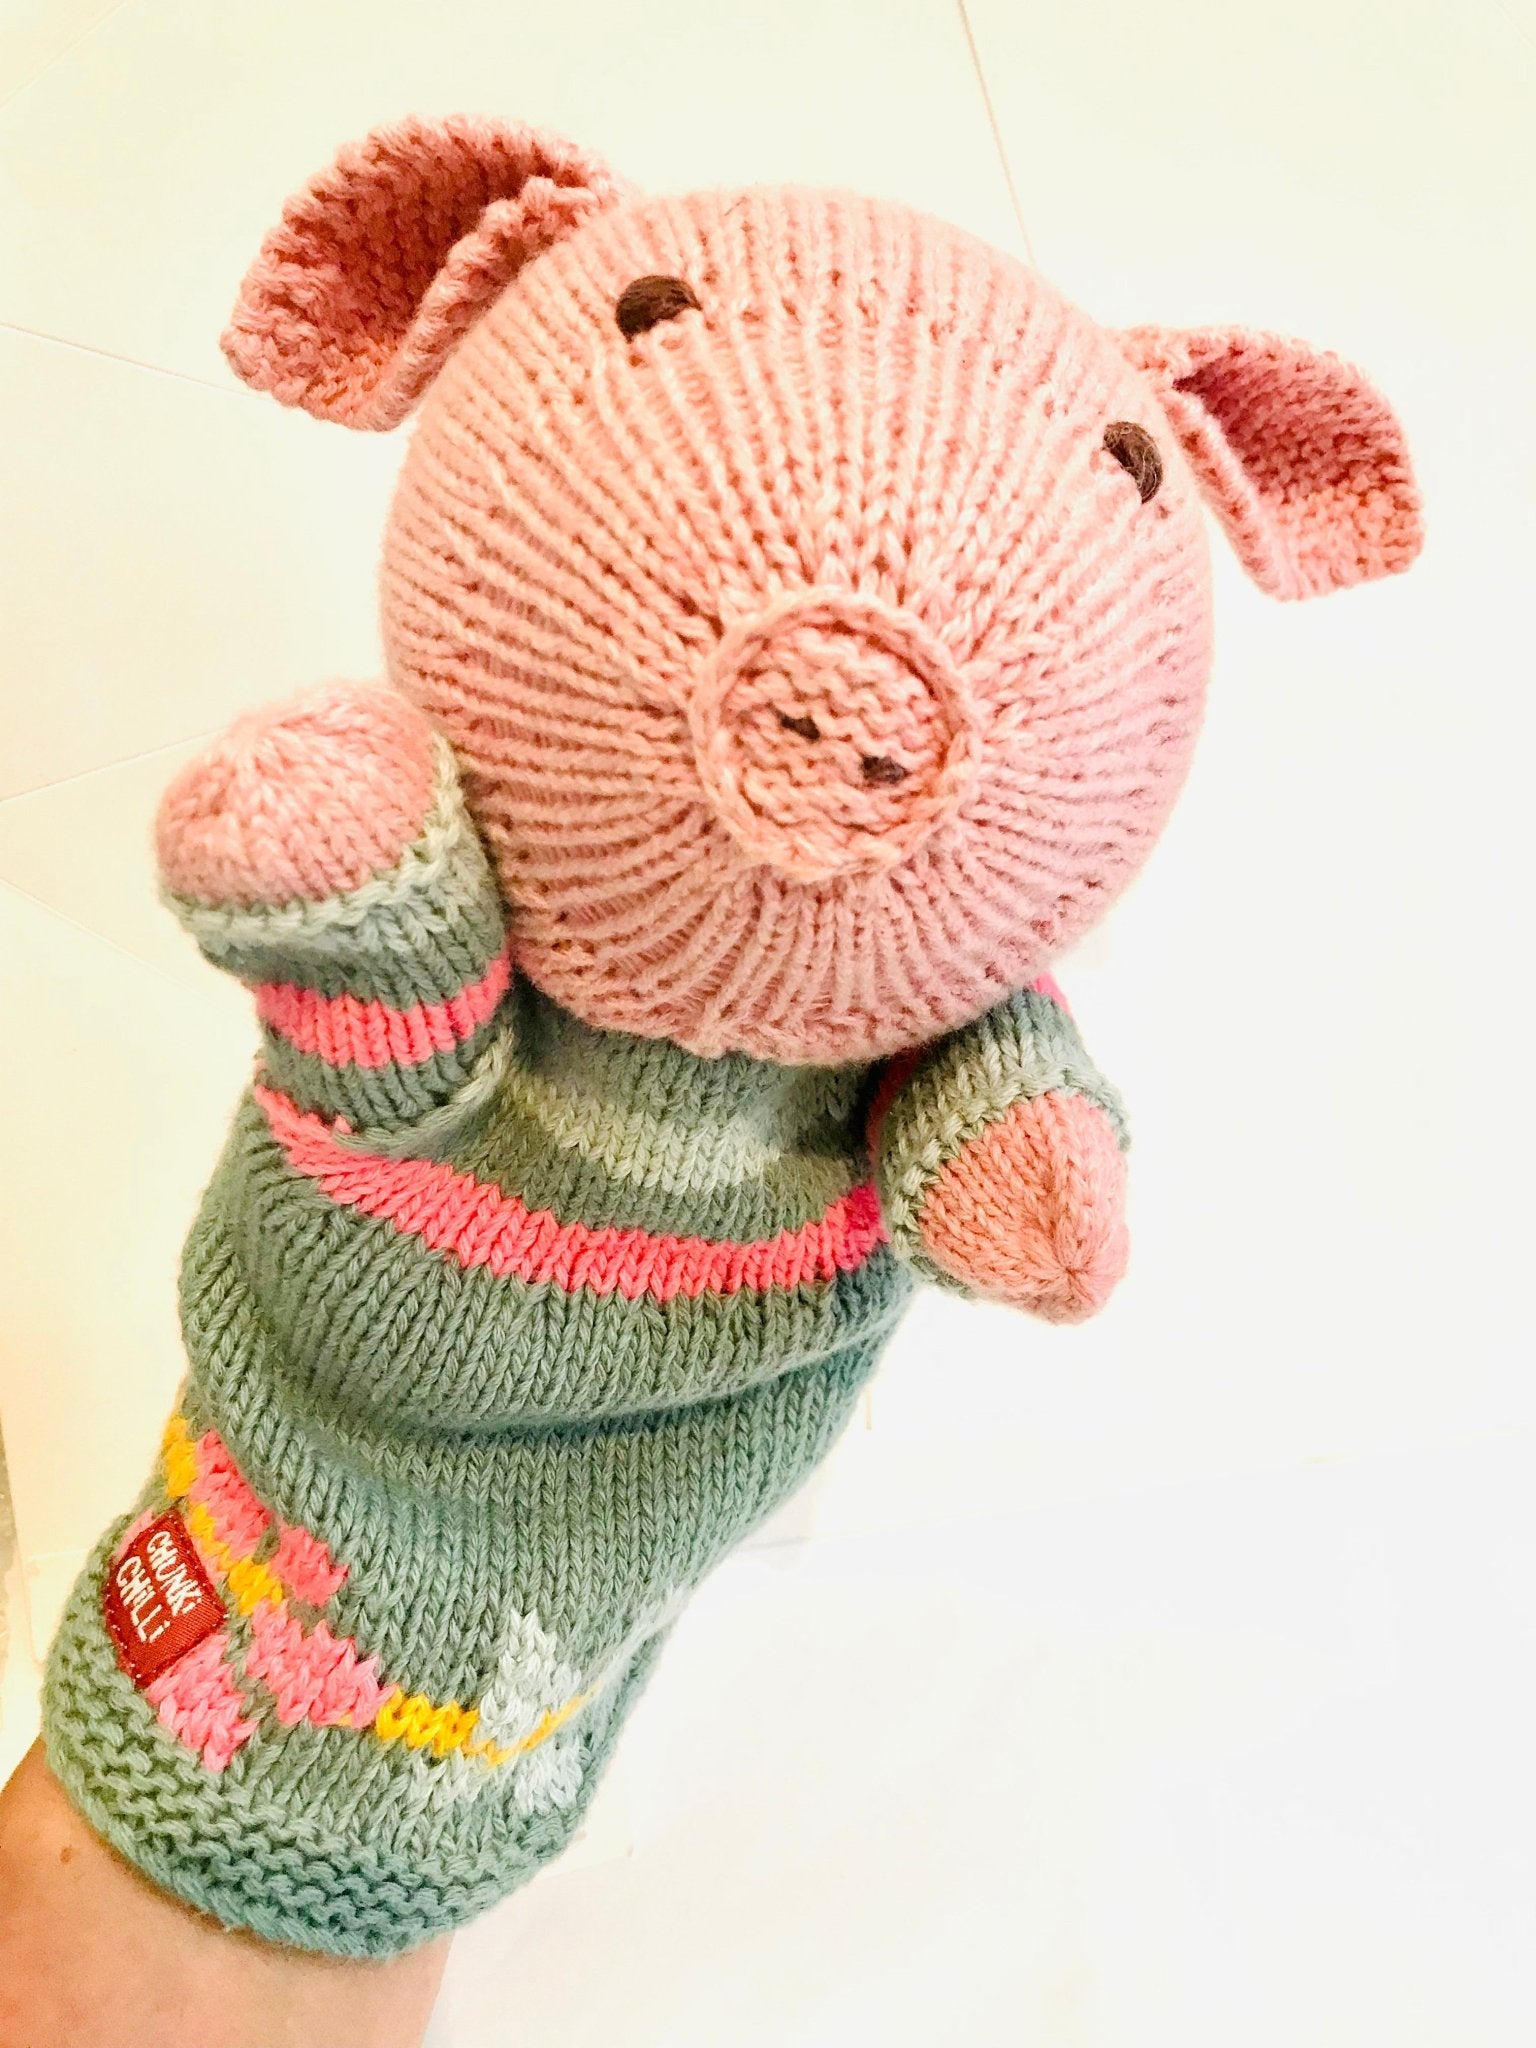 Pig Hand Puppet - The Nancy Smillie Shop - Art, Jewellery & Designer Gifts Glasgow